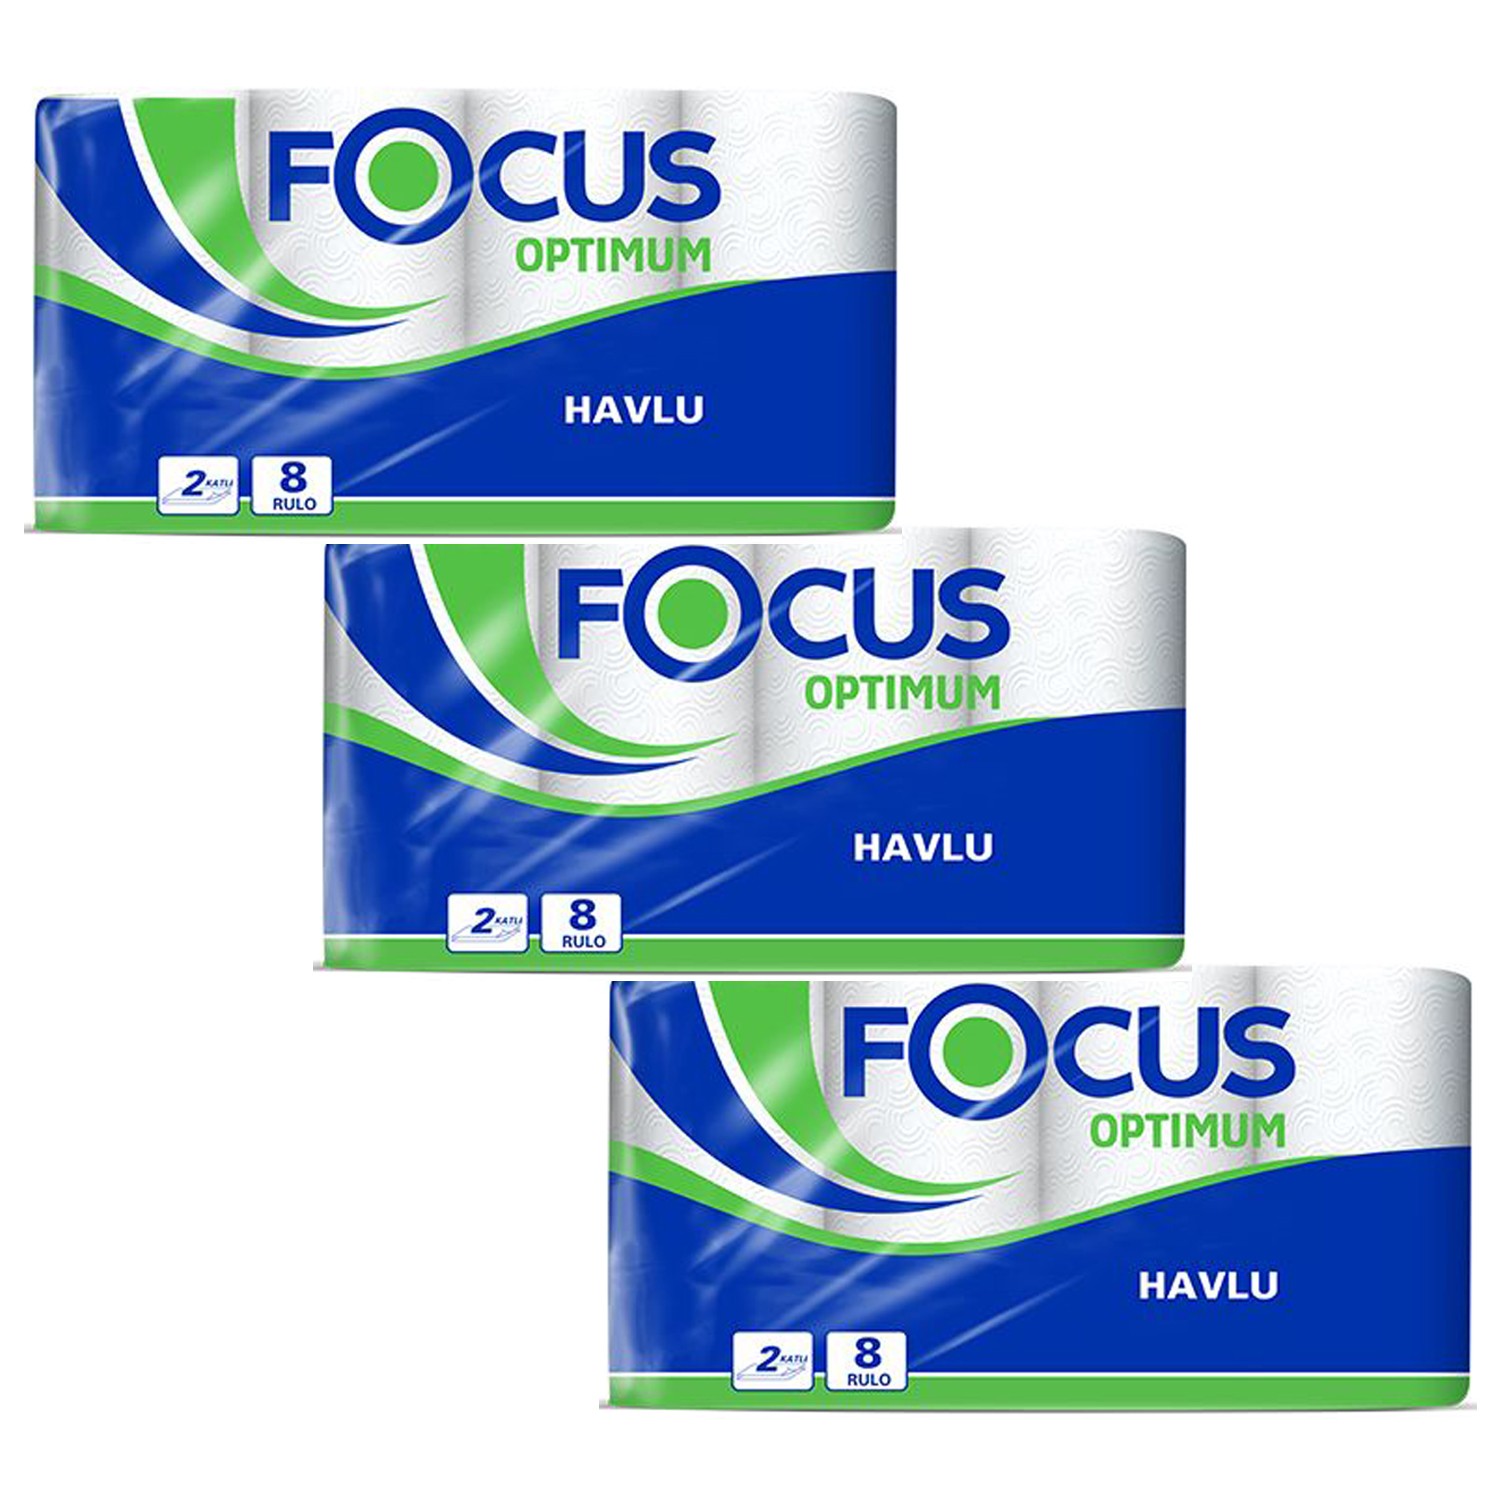 Focus Optimum Kağıt Havlu (8*3 Adet)